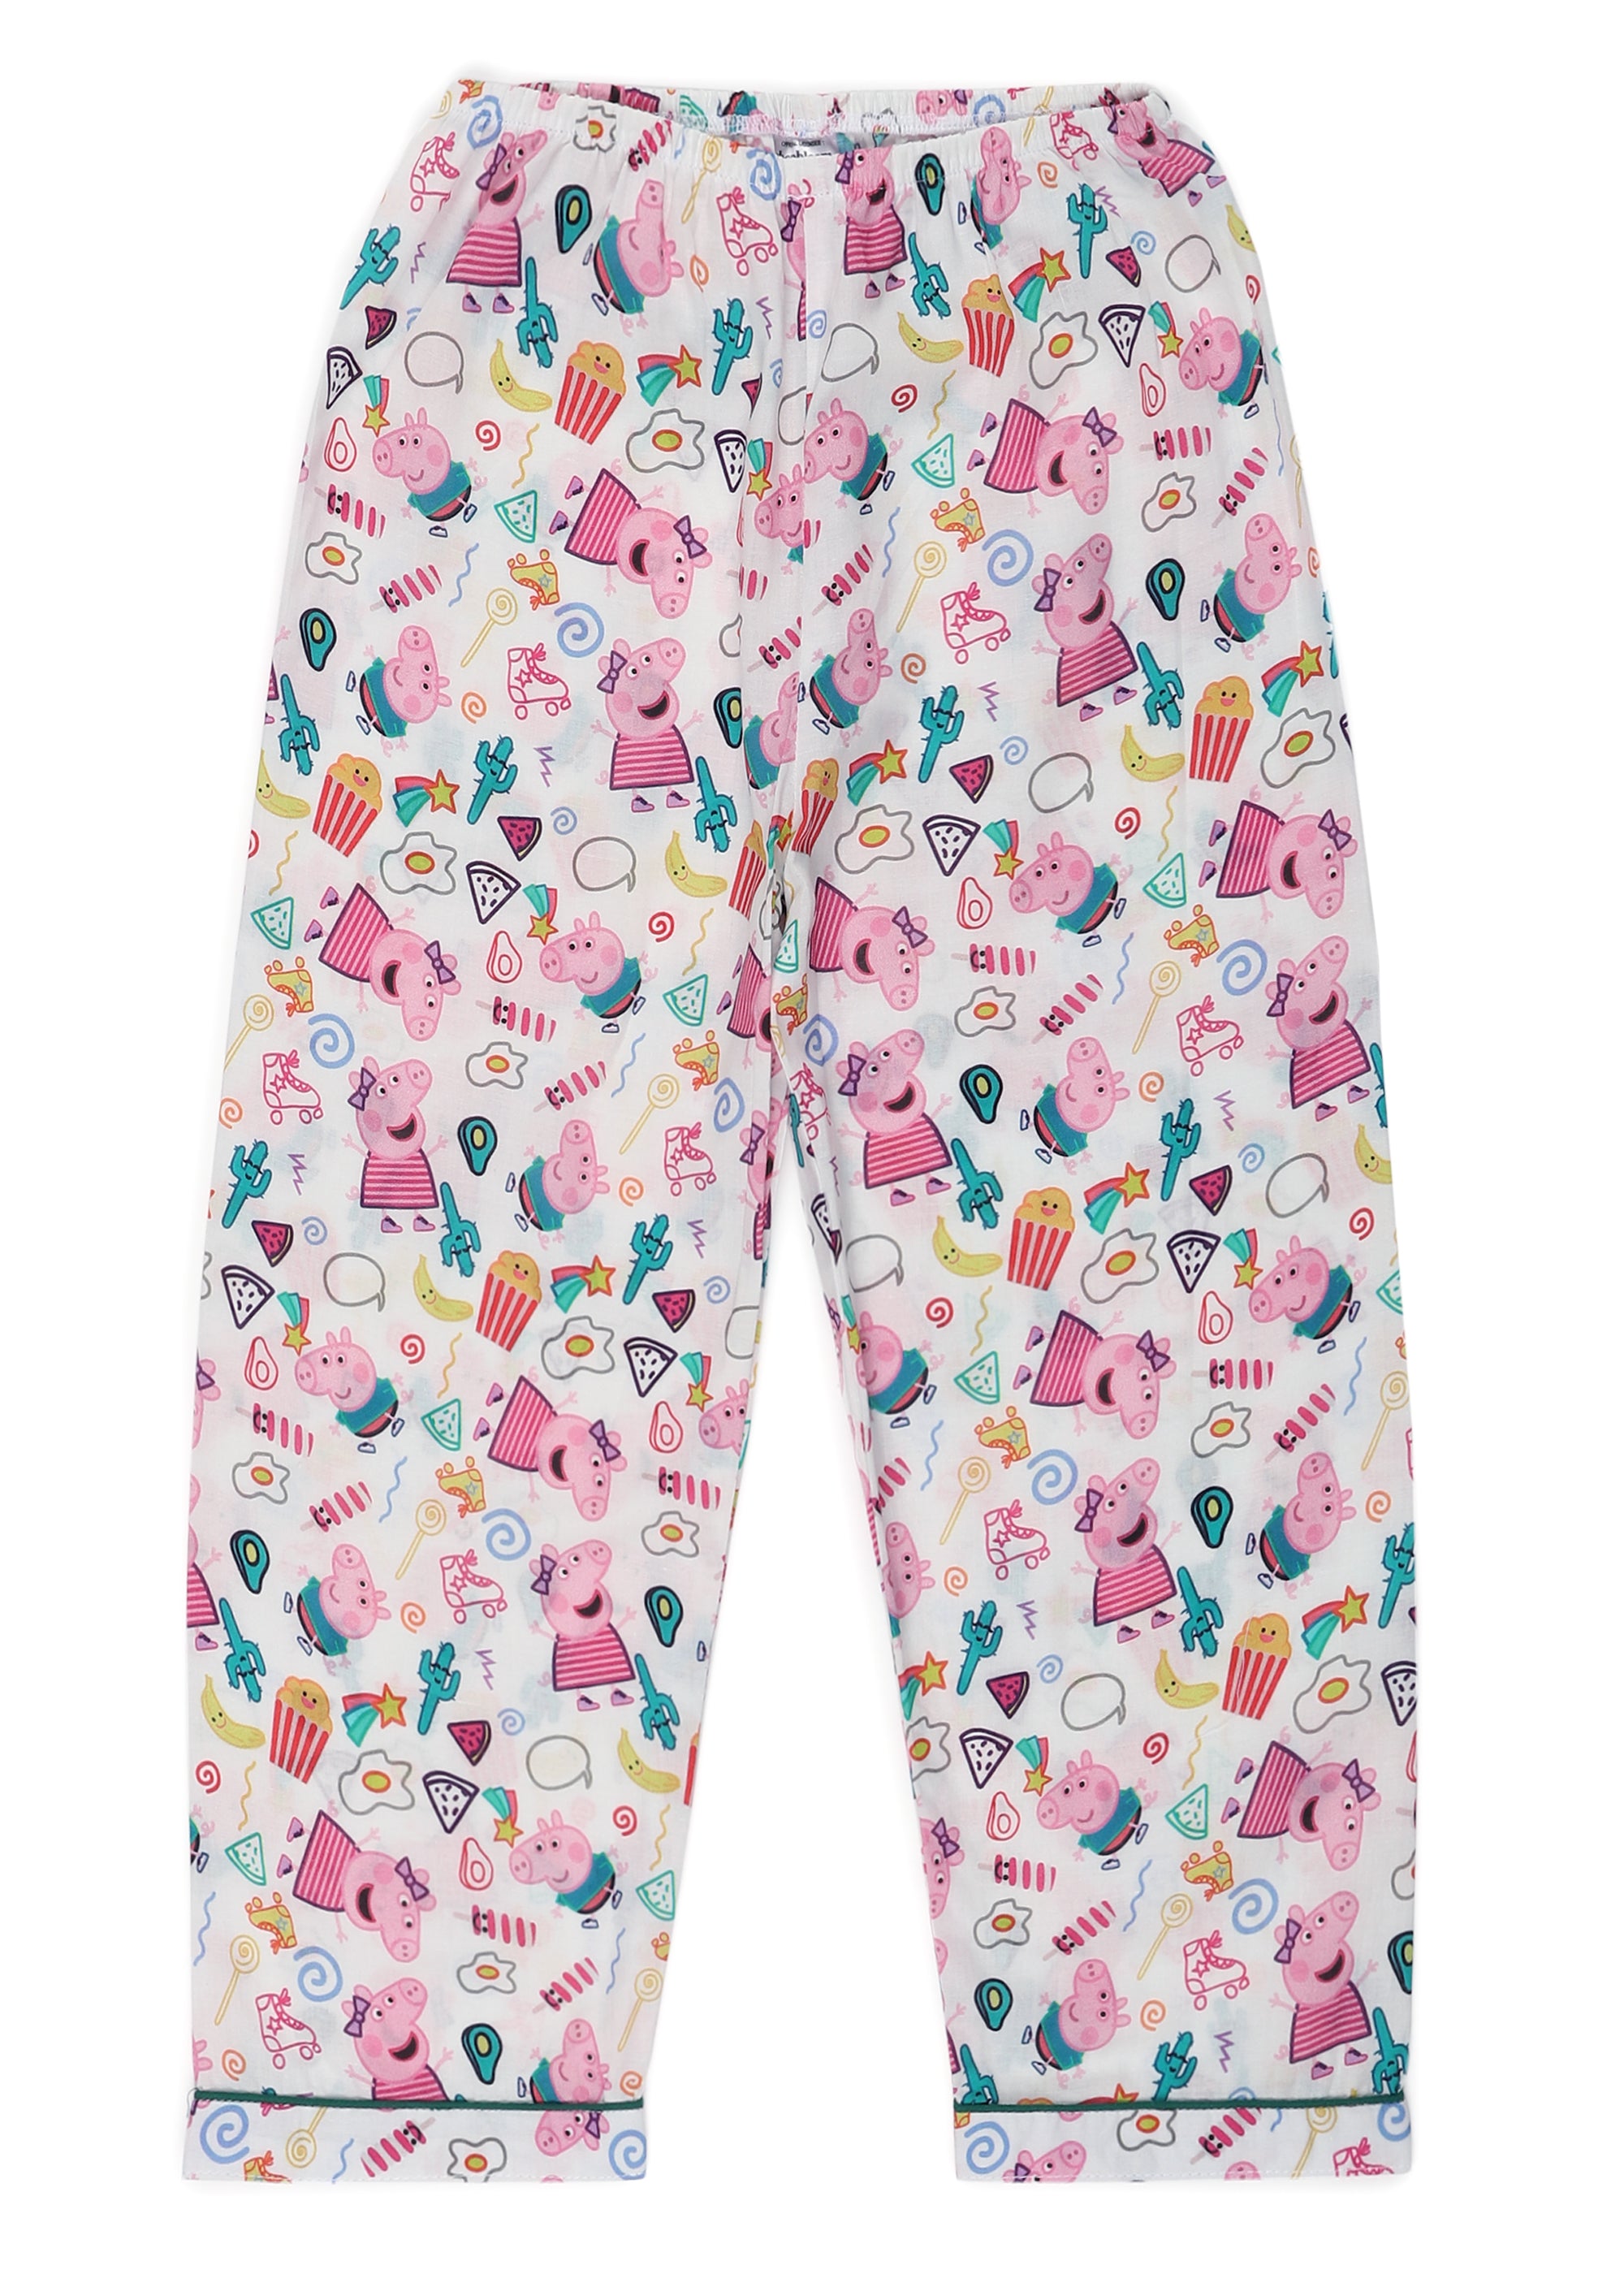 Peppa Mix Print Long Sleeve Kids Night Suit - Shopbloom